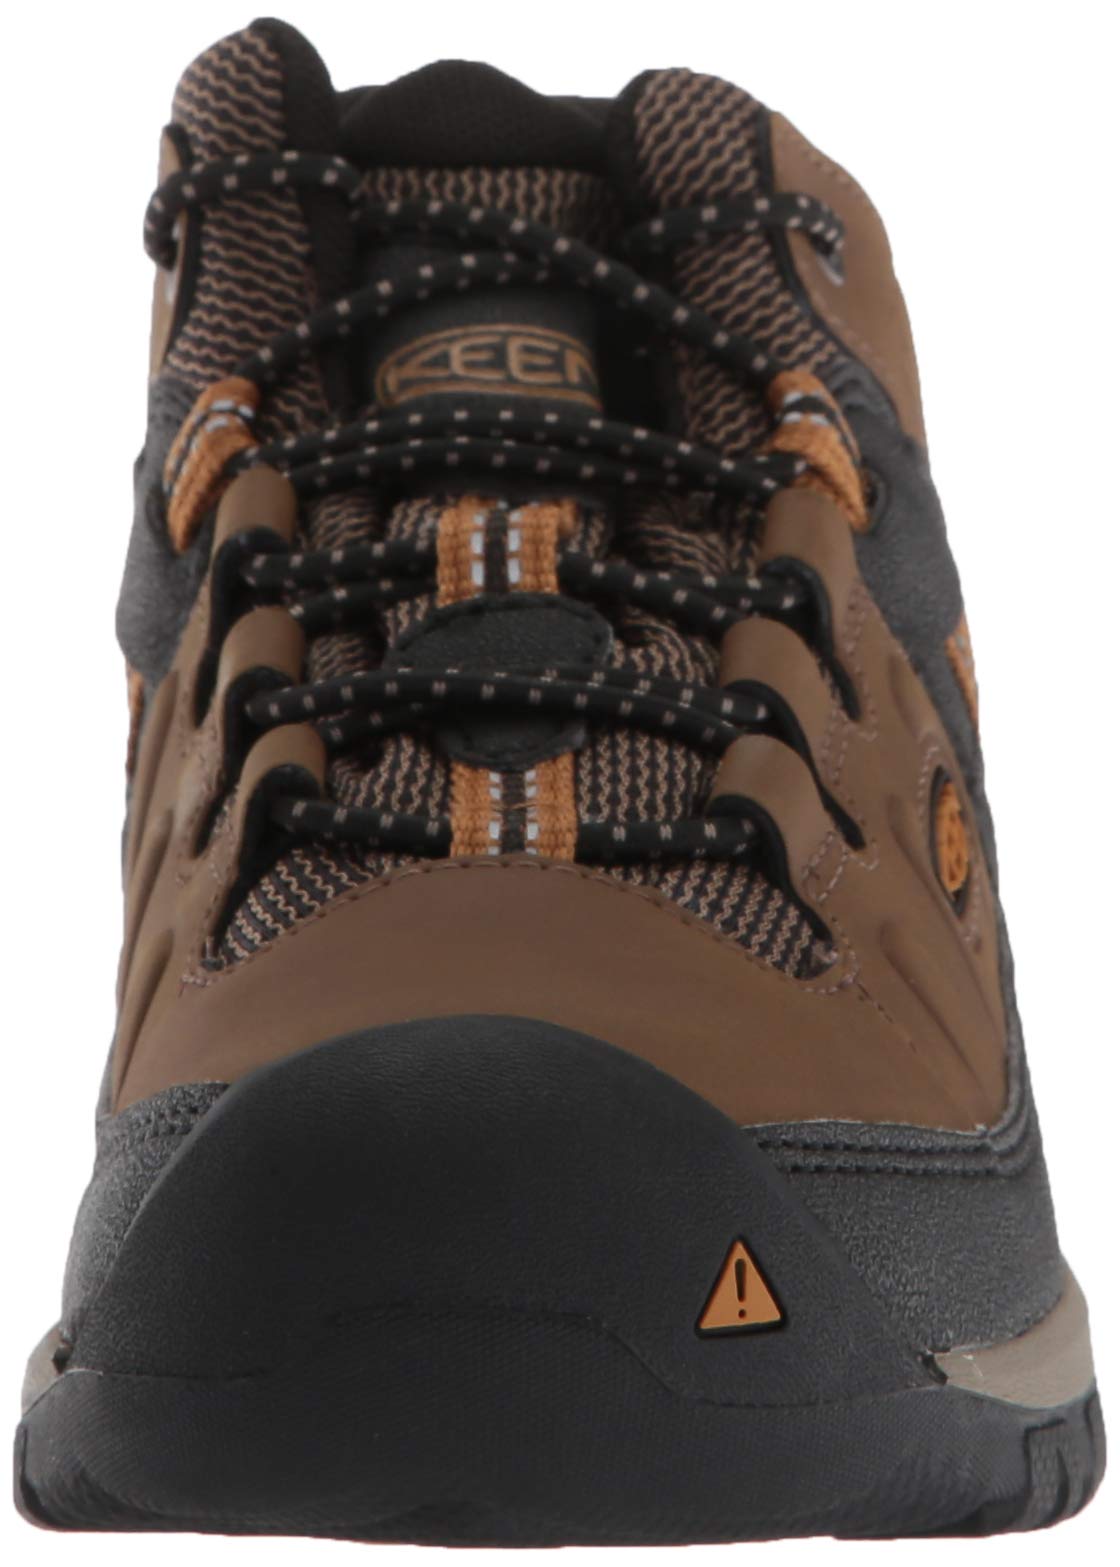 KEEN Unisex-Child Targhee Mid Height Waterproof Hiking Boots